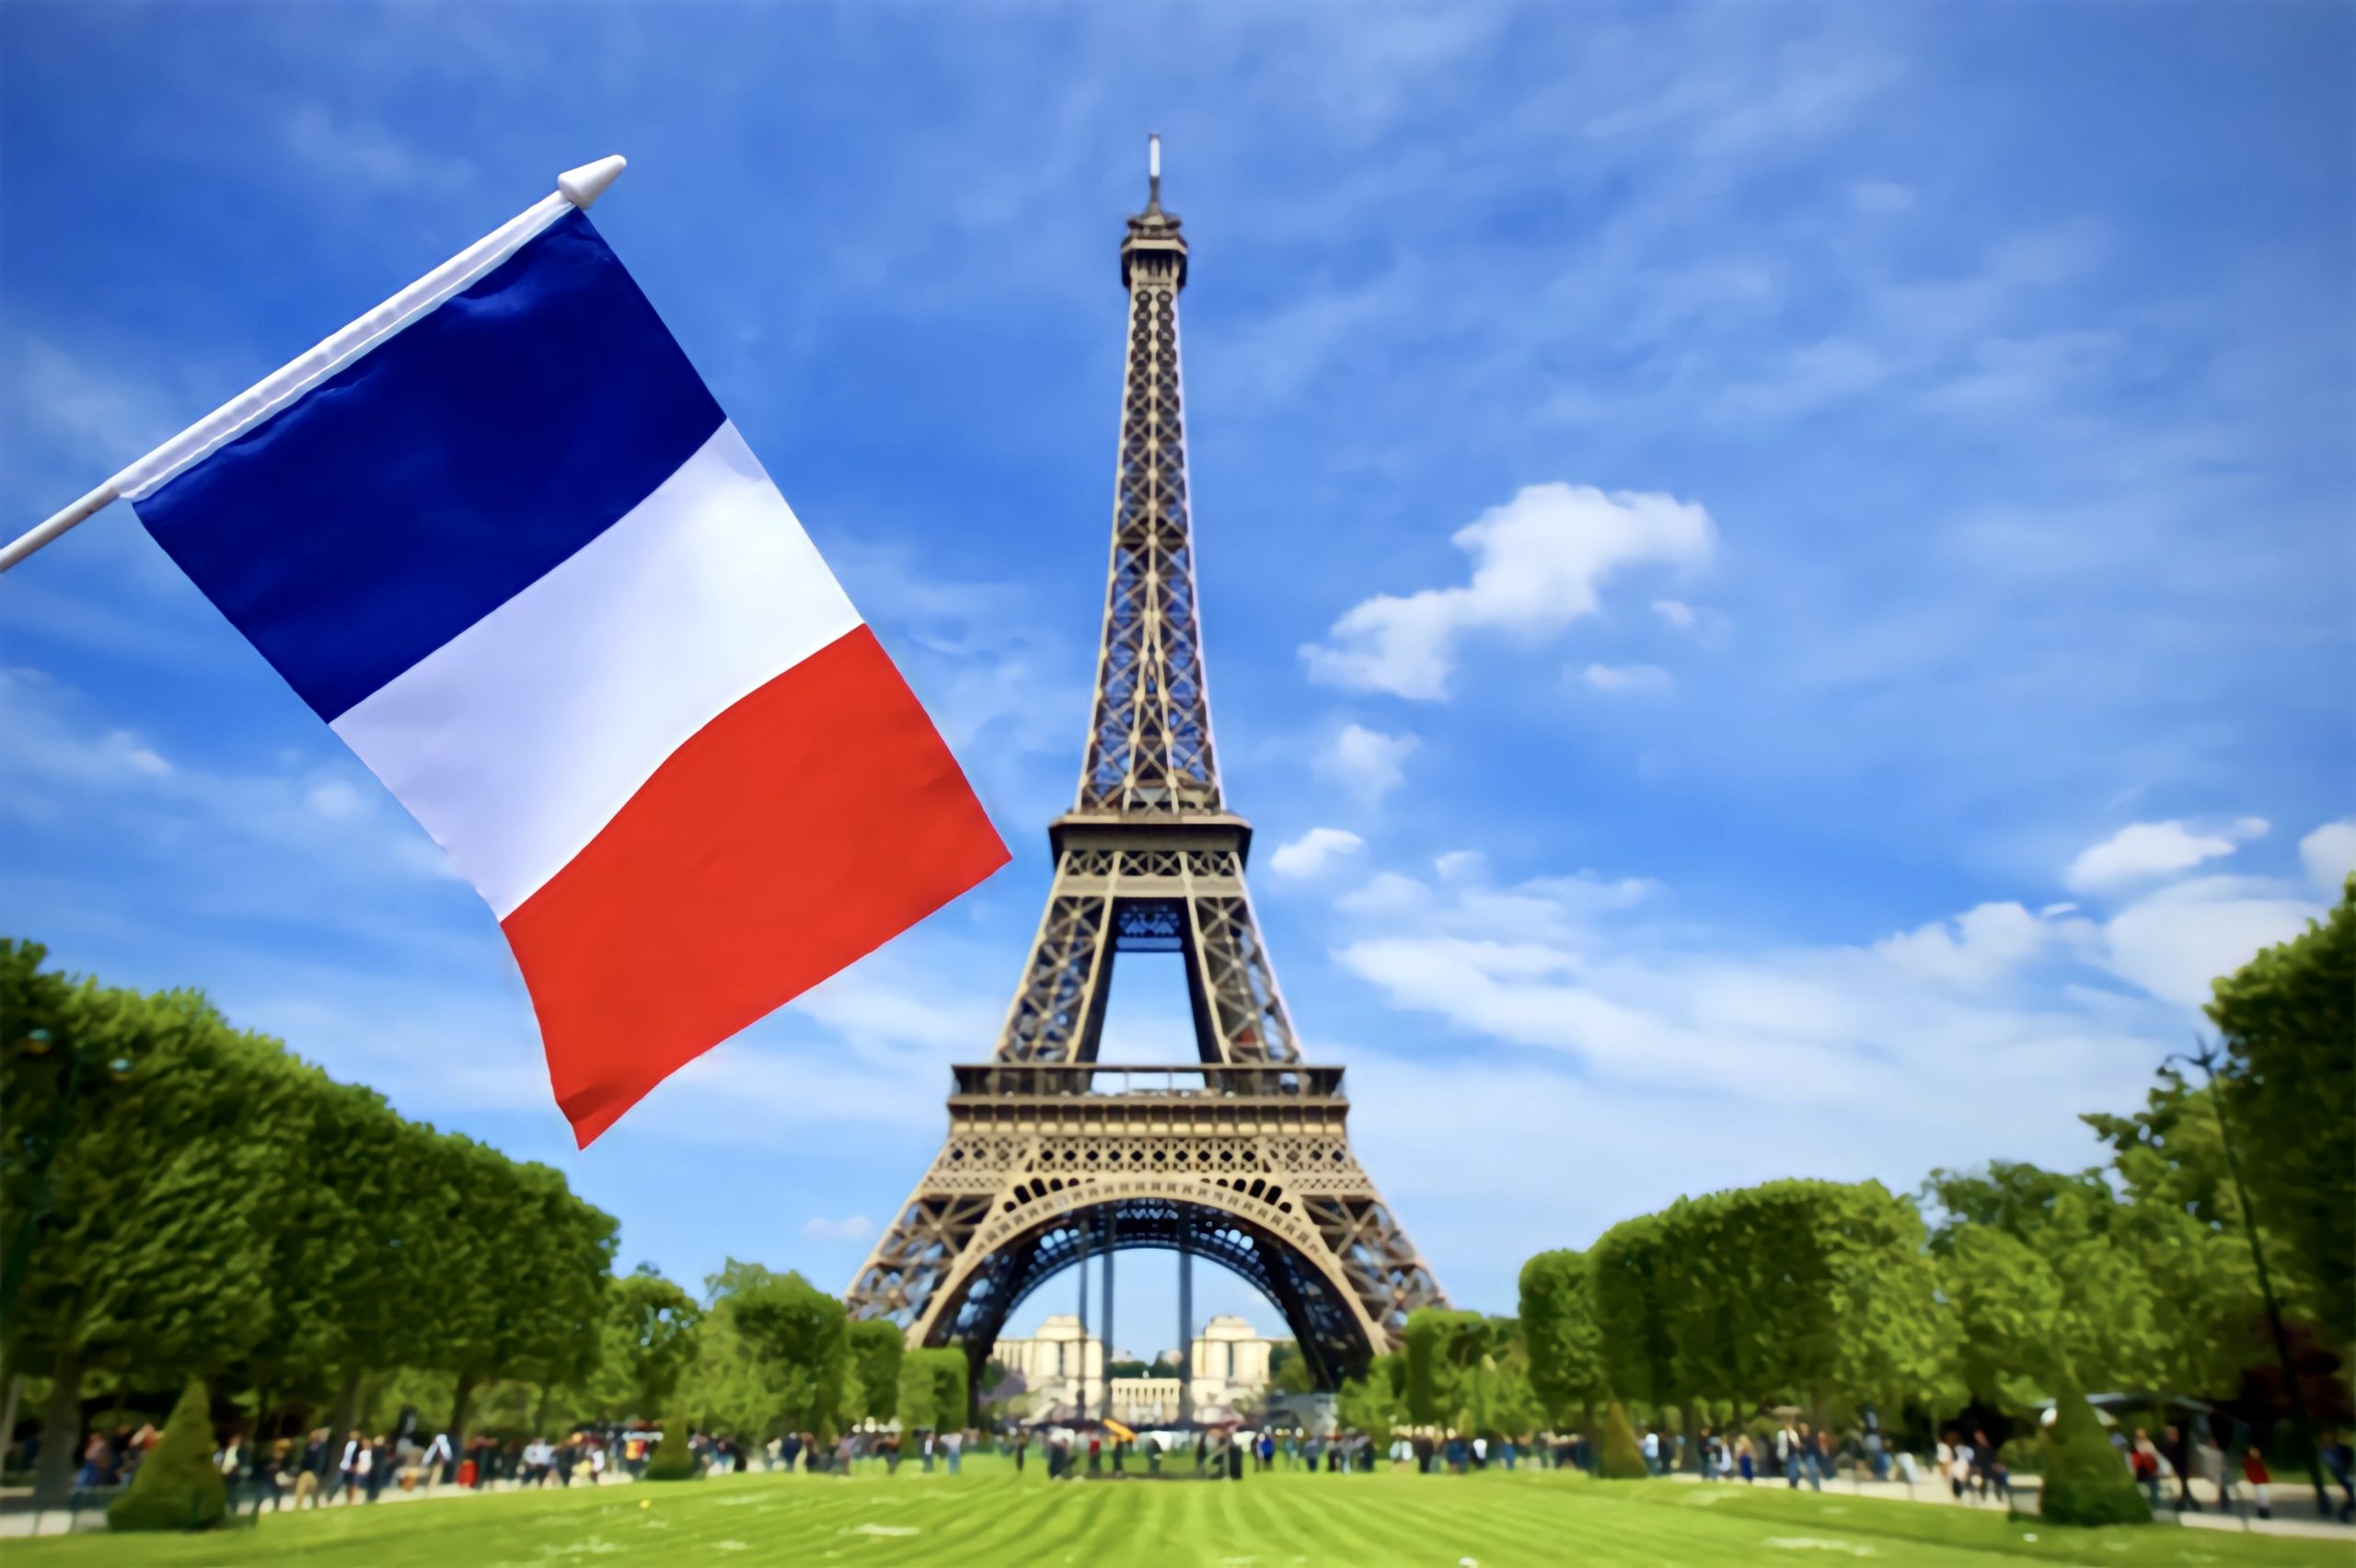 Fr страна. Эйфель башня с флагом. Флаг Парижа Франции. Эльфиева башня с флагом Франции. Символы Парижа и Франции.